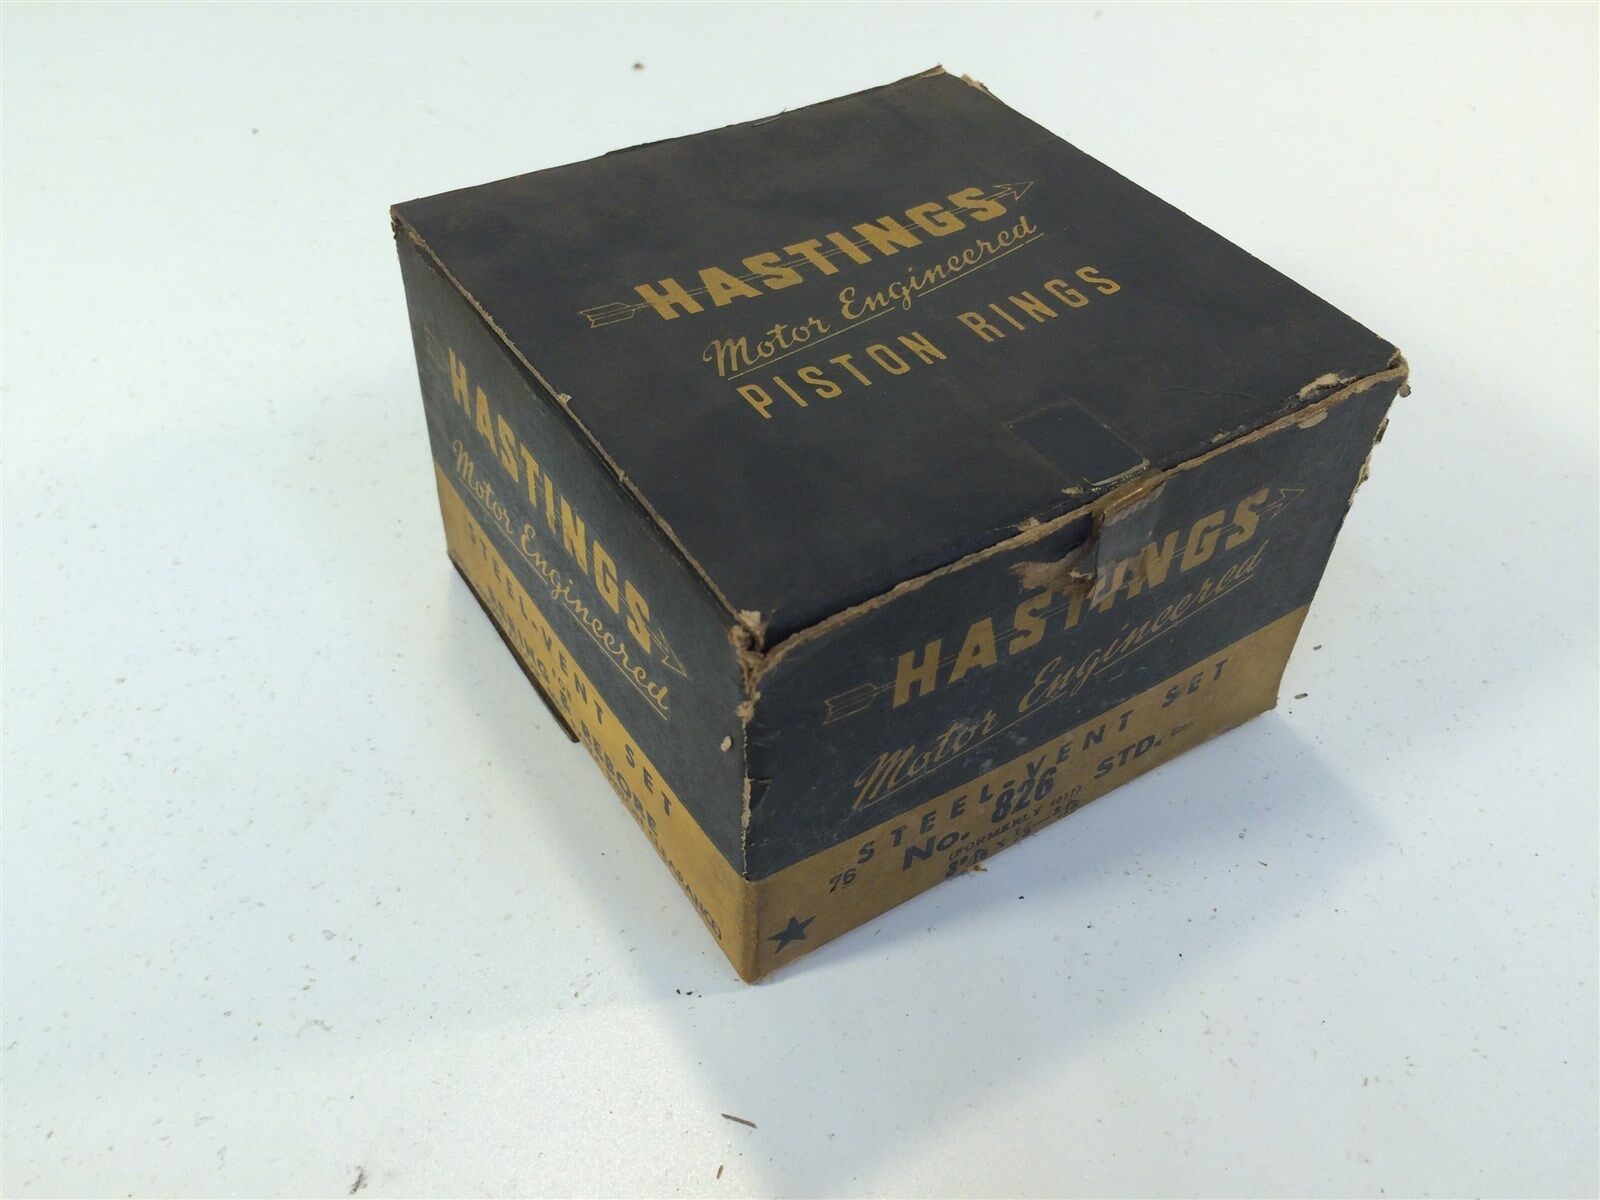 Vintage Hastings Steel-Vent Set Piston Rings No. 826 STD. Made...